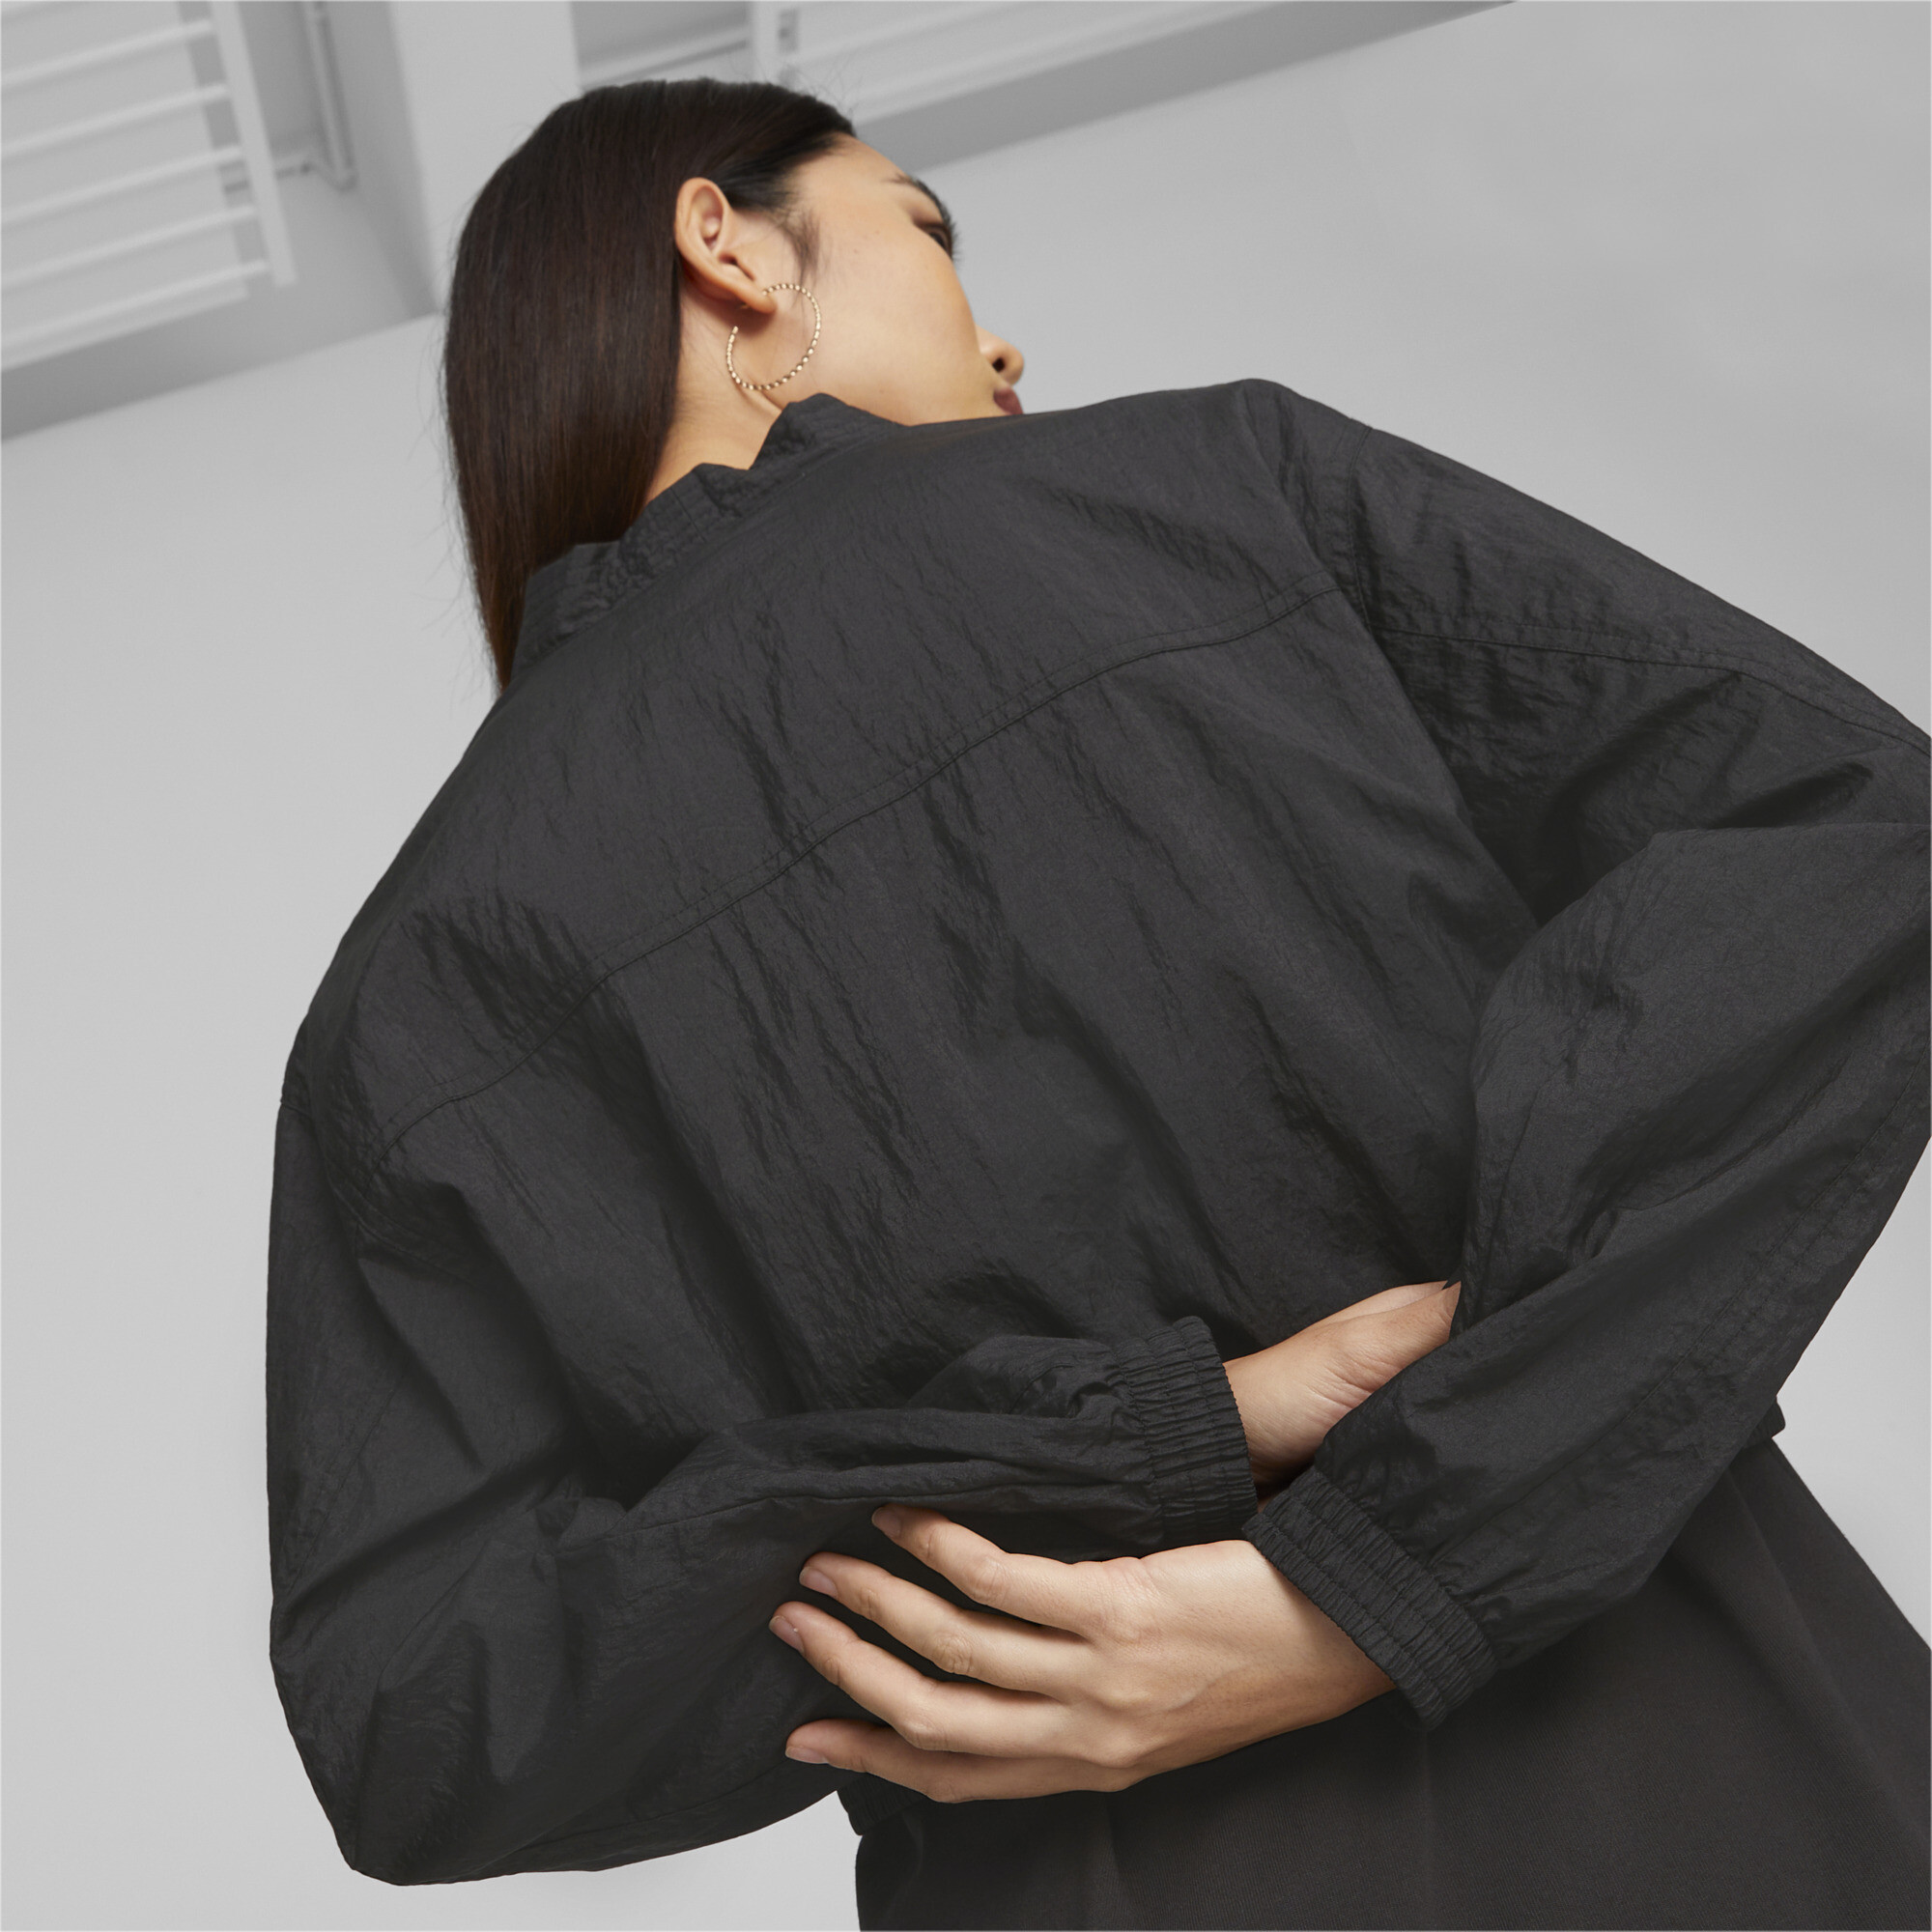 Women's PUMA Dare To Woven Jacket Women In Black, Size Large